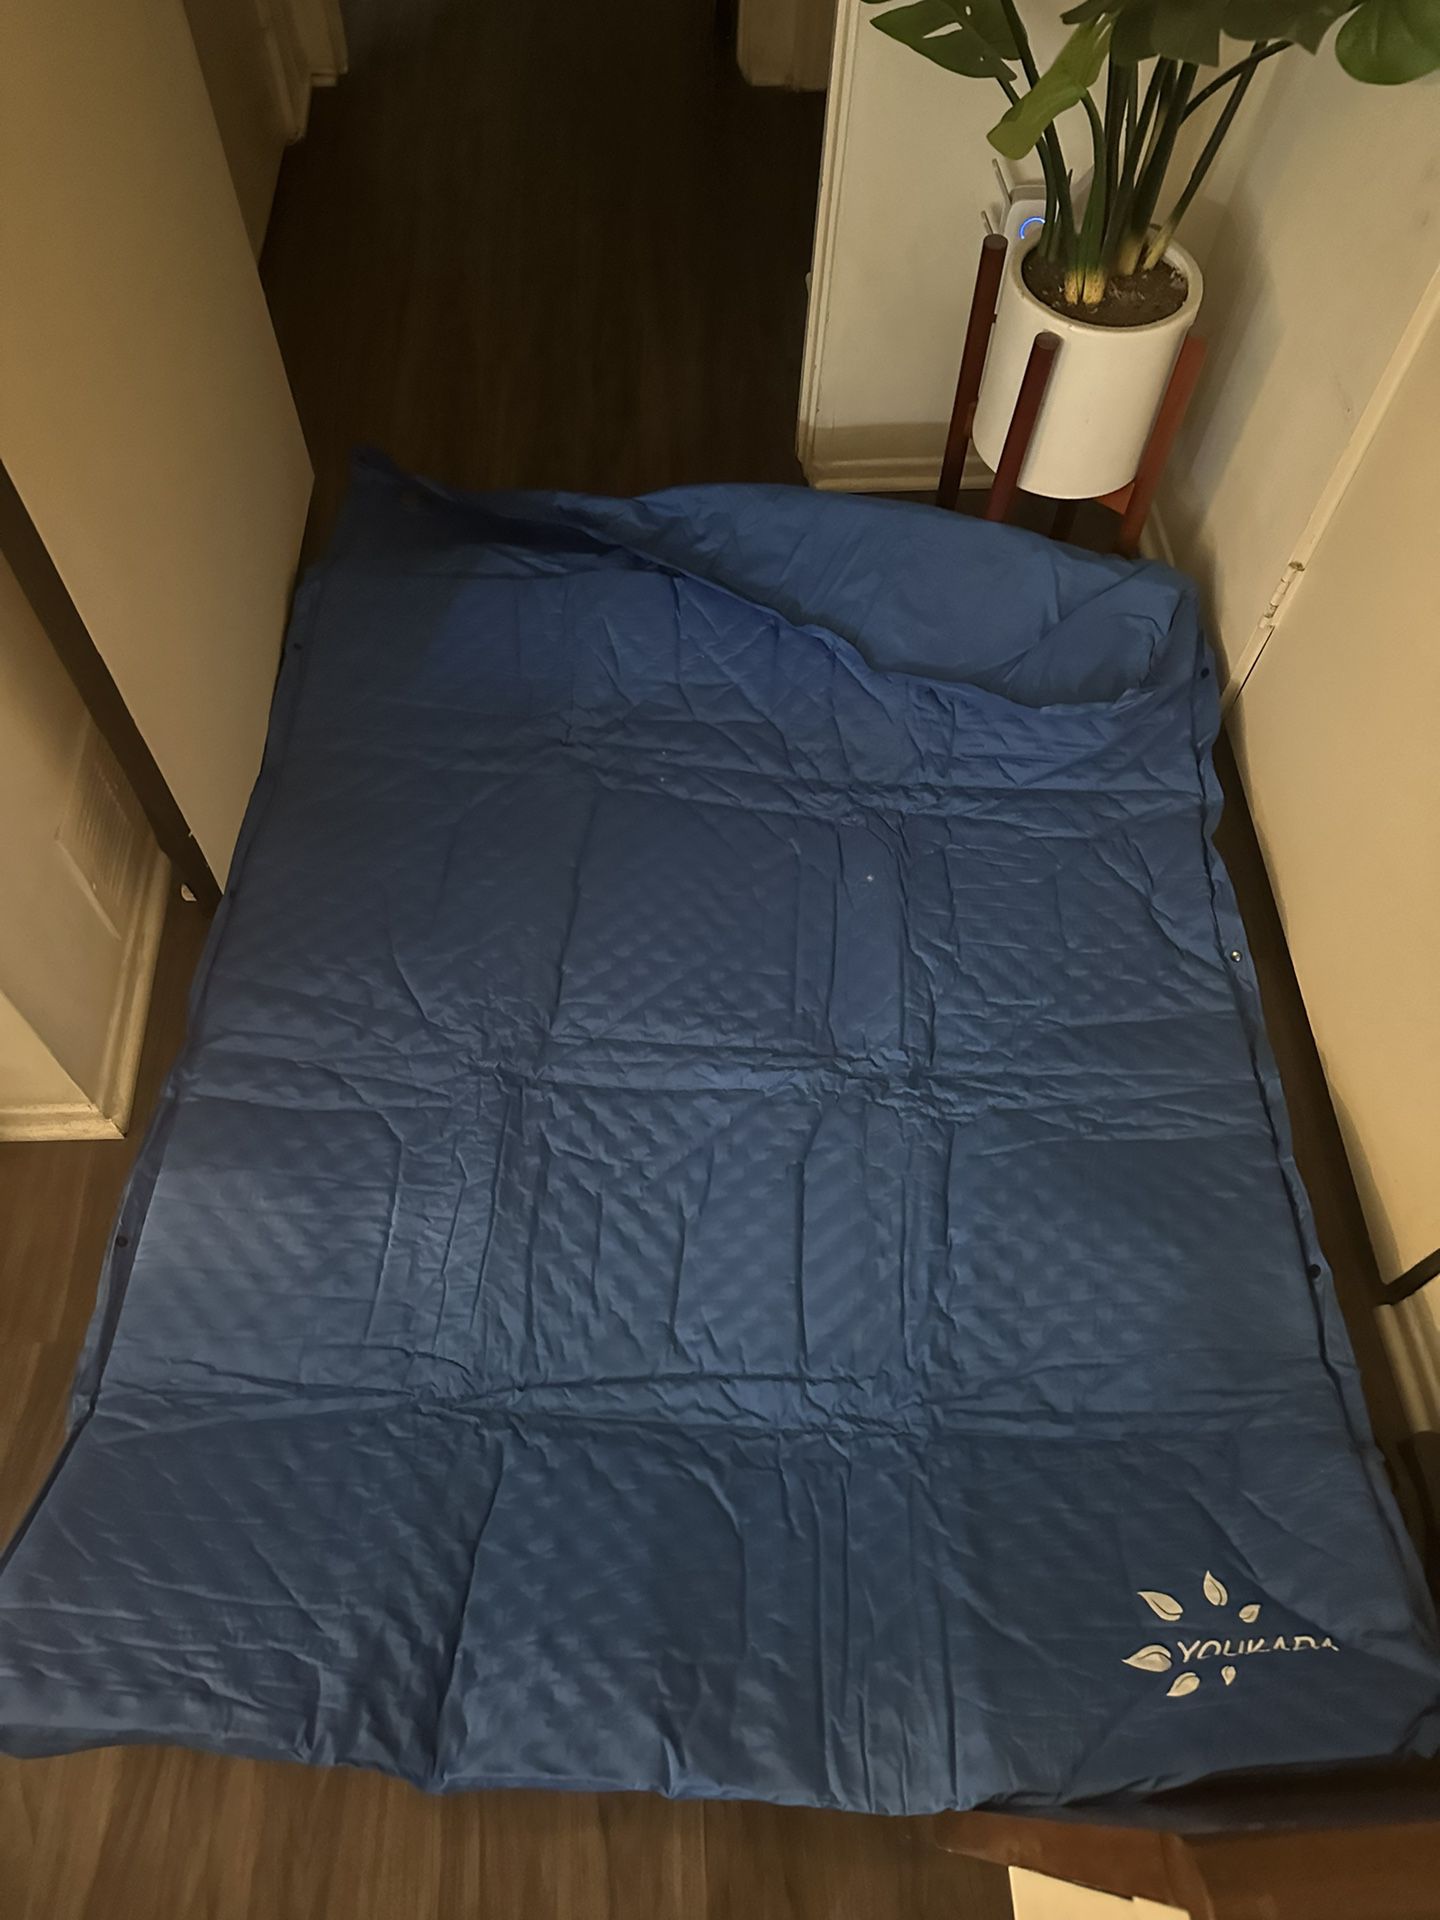 YOUKADA Sleeping Pad Foam Self-Inflating Camping Mat  Camping pad,  Sleeping mat camping, Backpacking sleeping pad